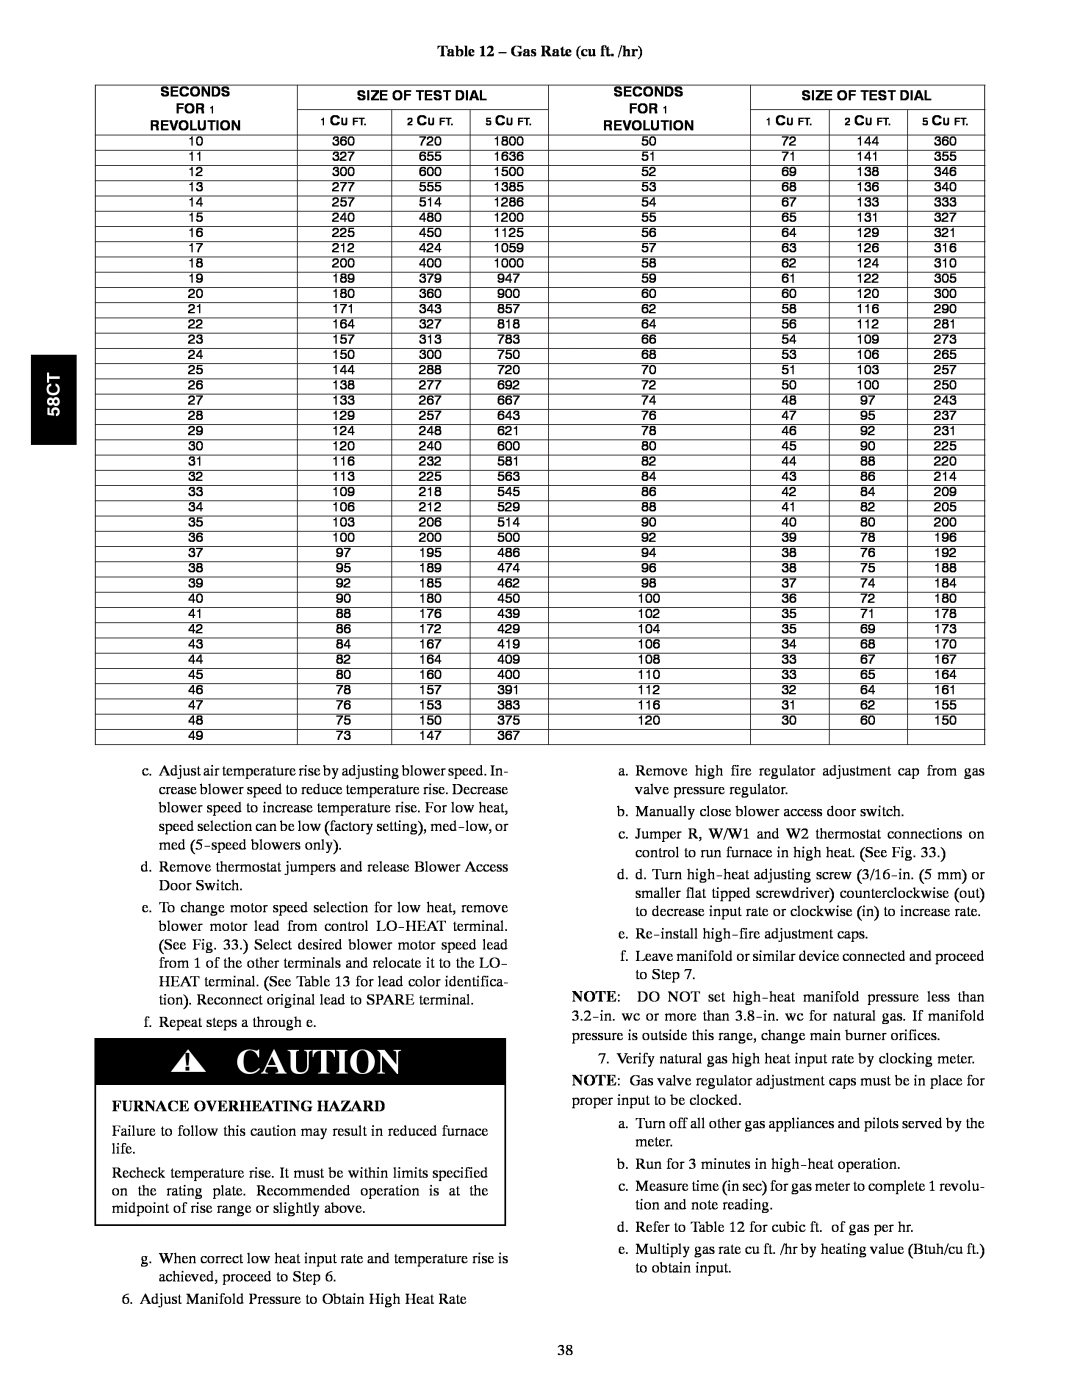 Carrier 58CTA/CTX instruction manual Gas Rate cu ft. /hr, Furnace Overheating Hazard 